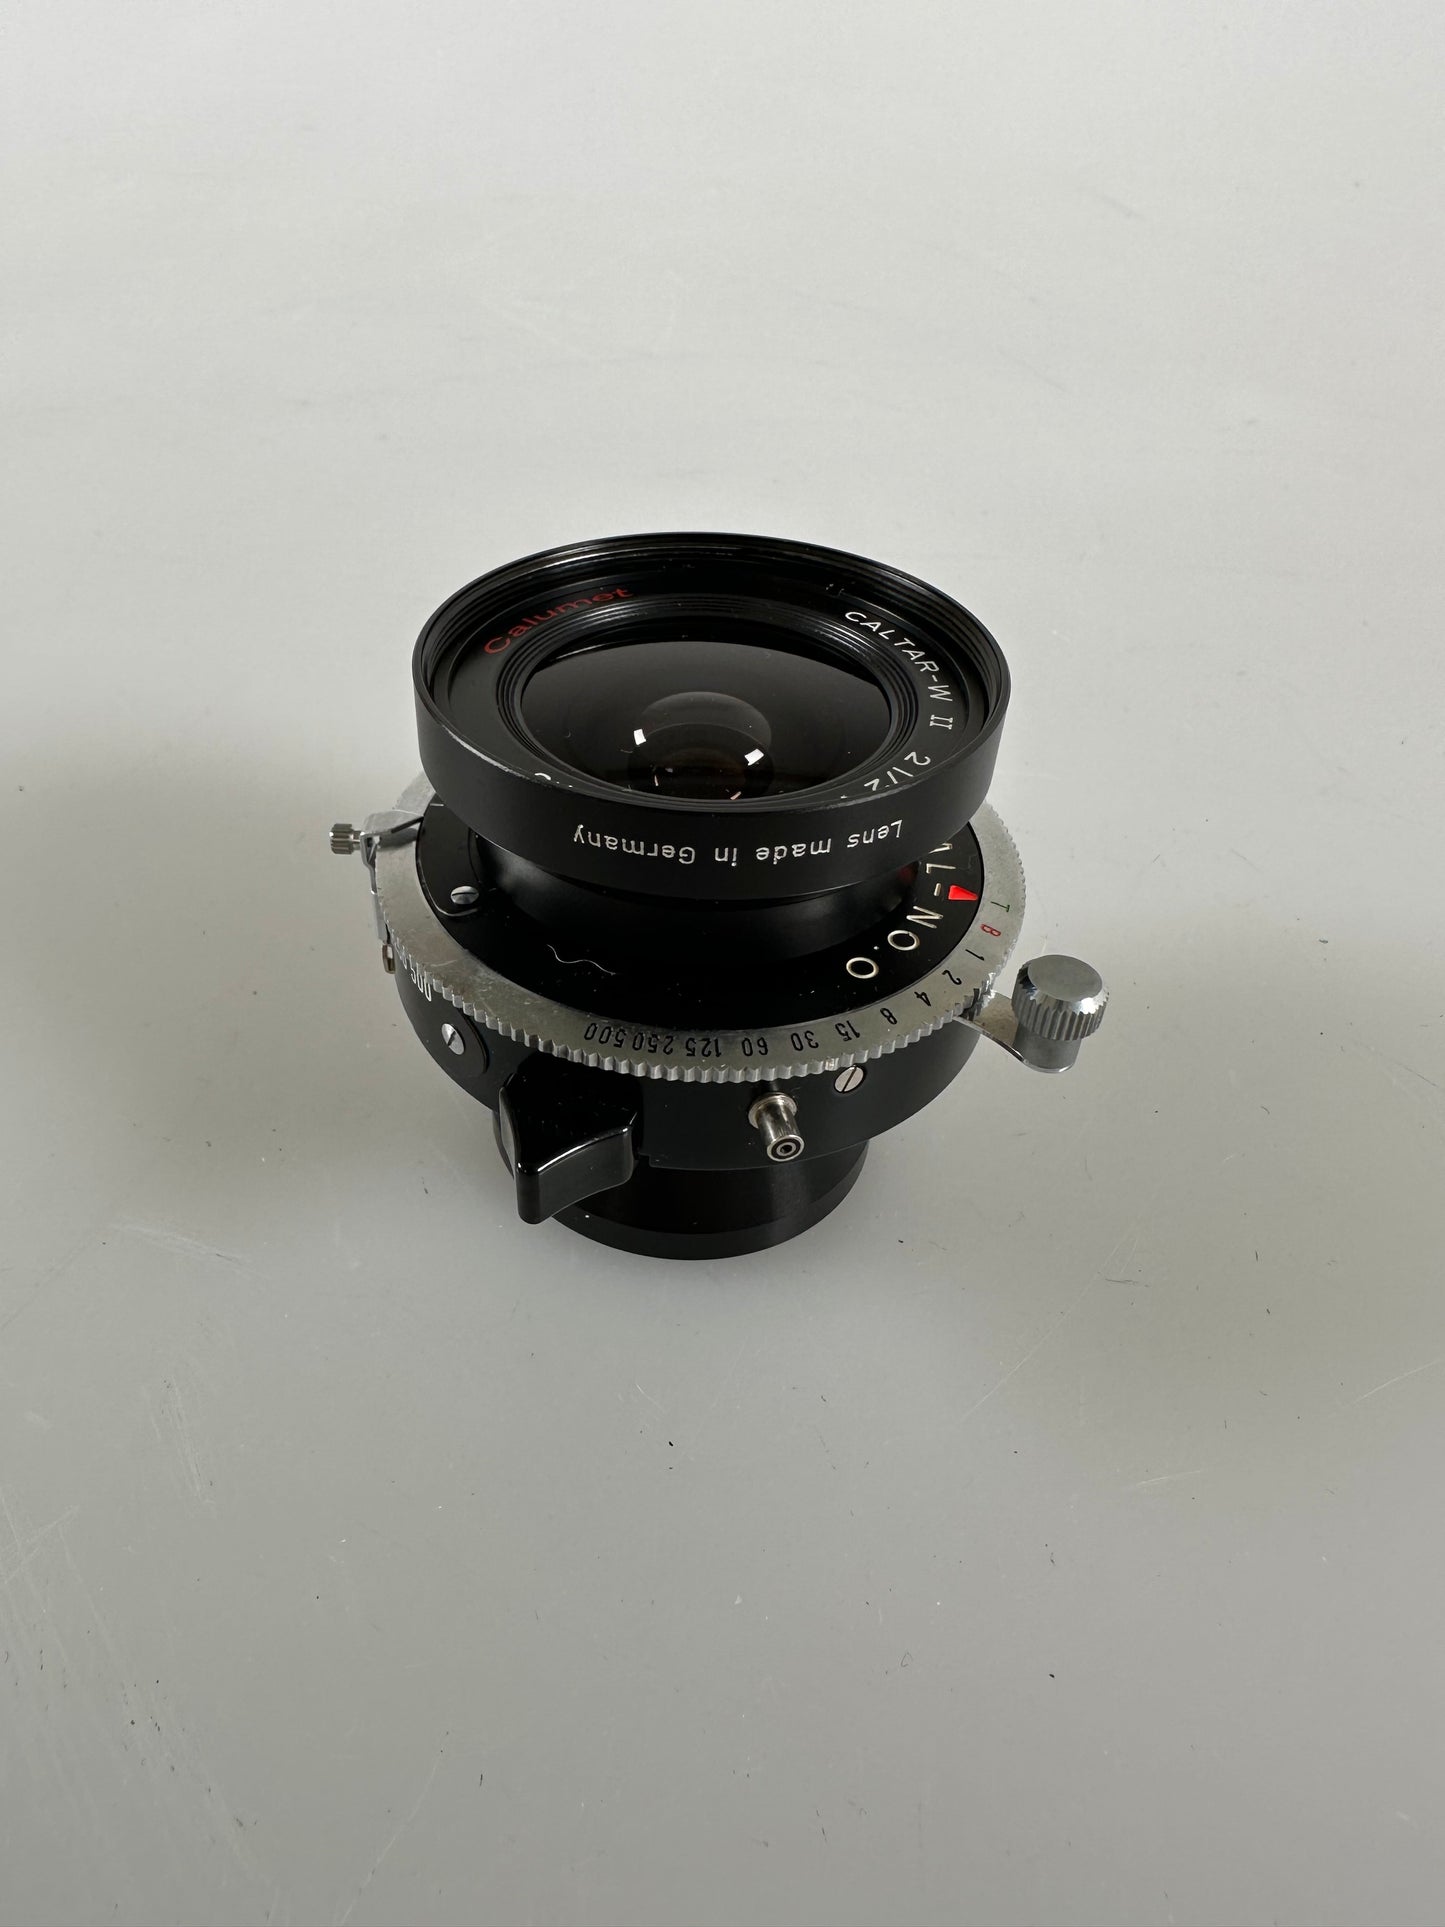 Caltar W II 2 1/2 inch 65mm F8 lens in Copal 0 shutter large format lens